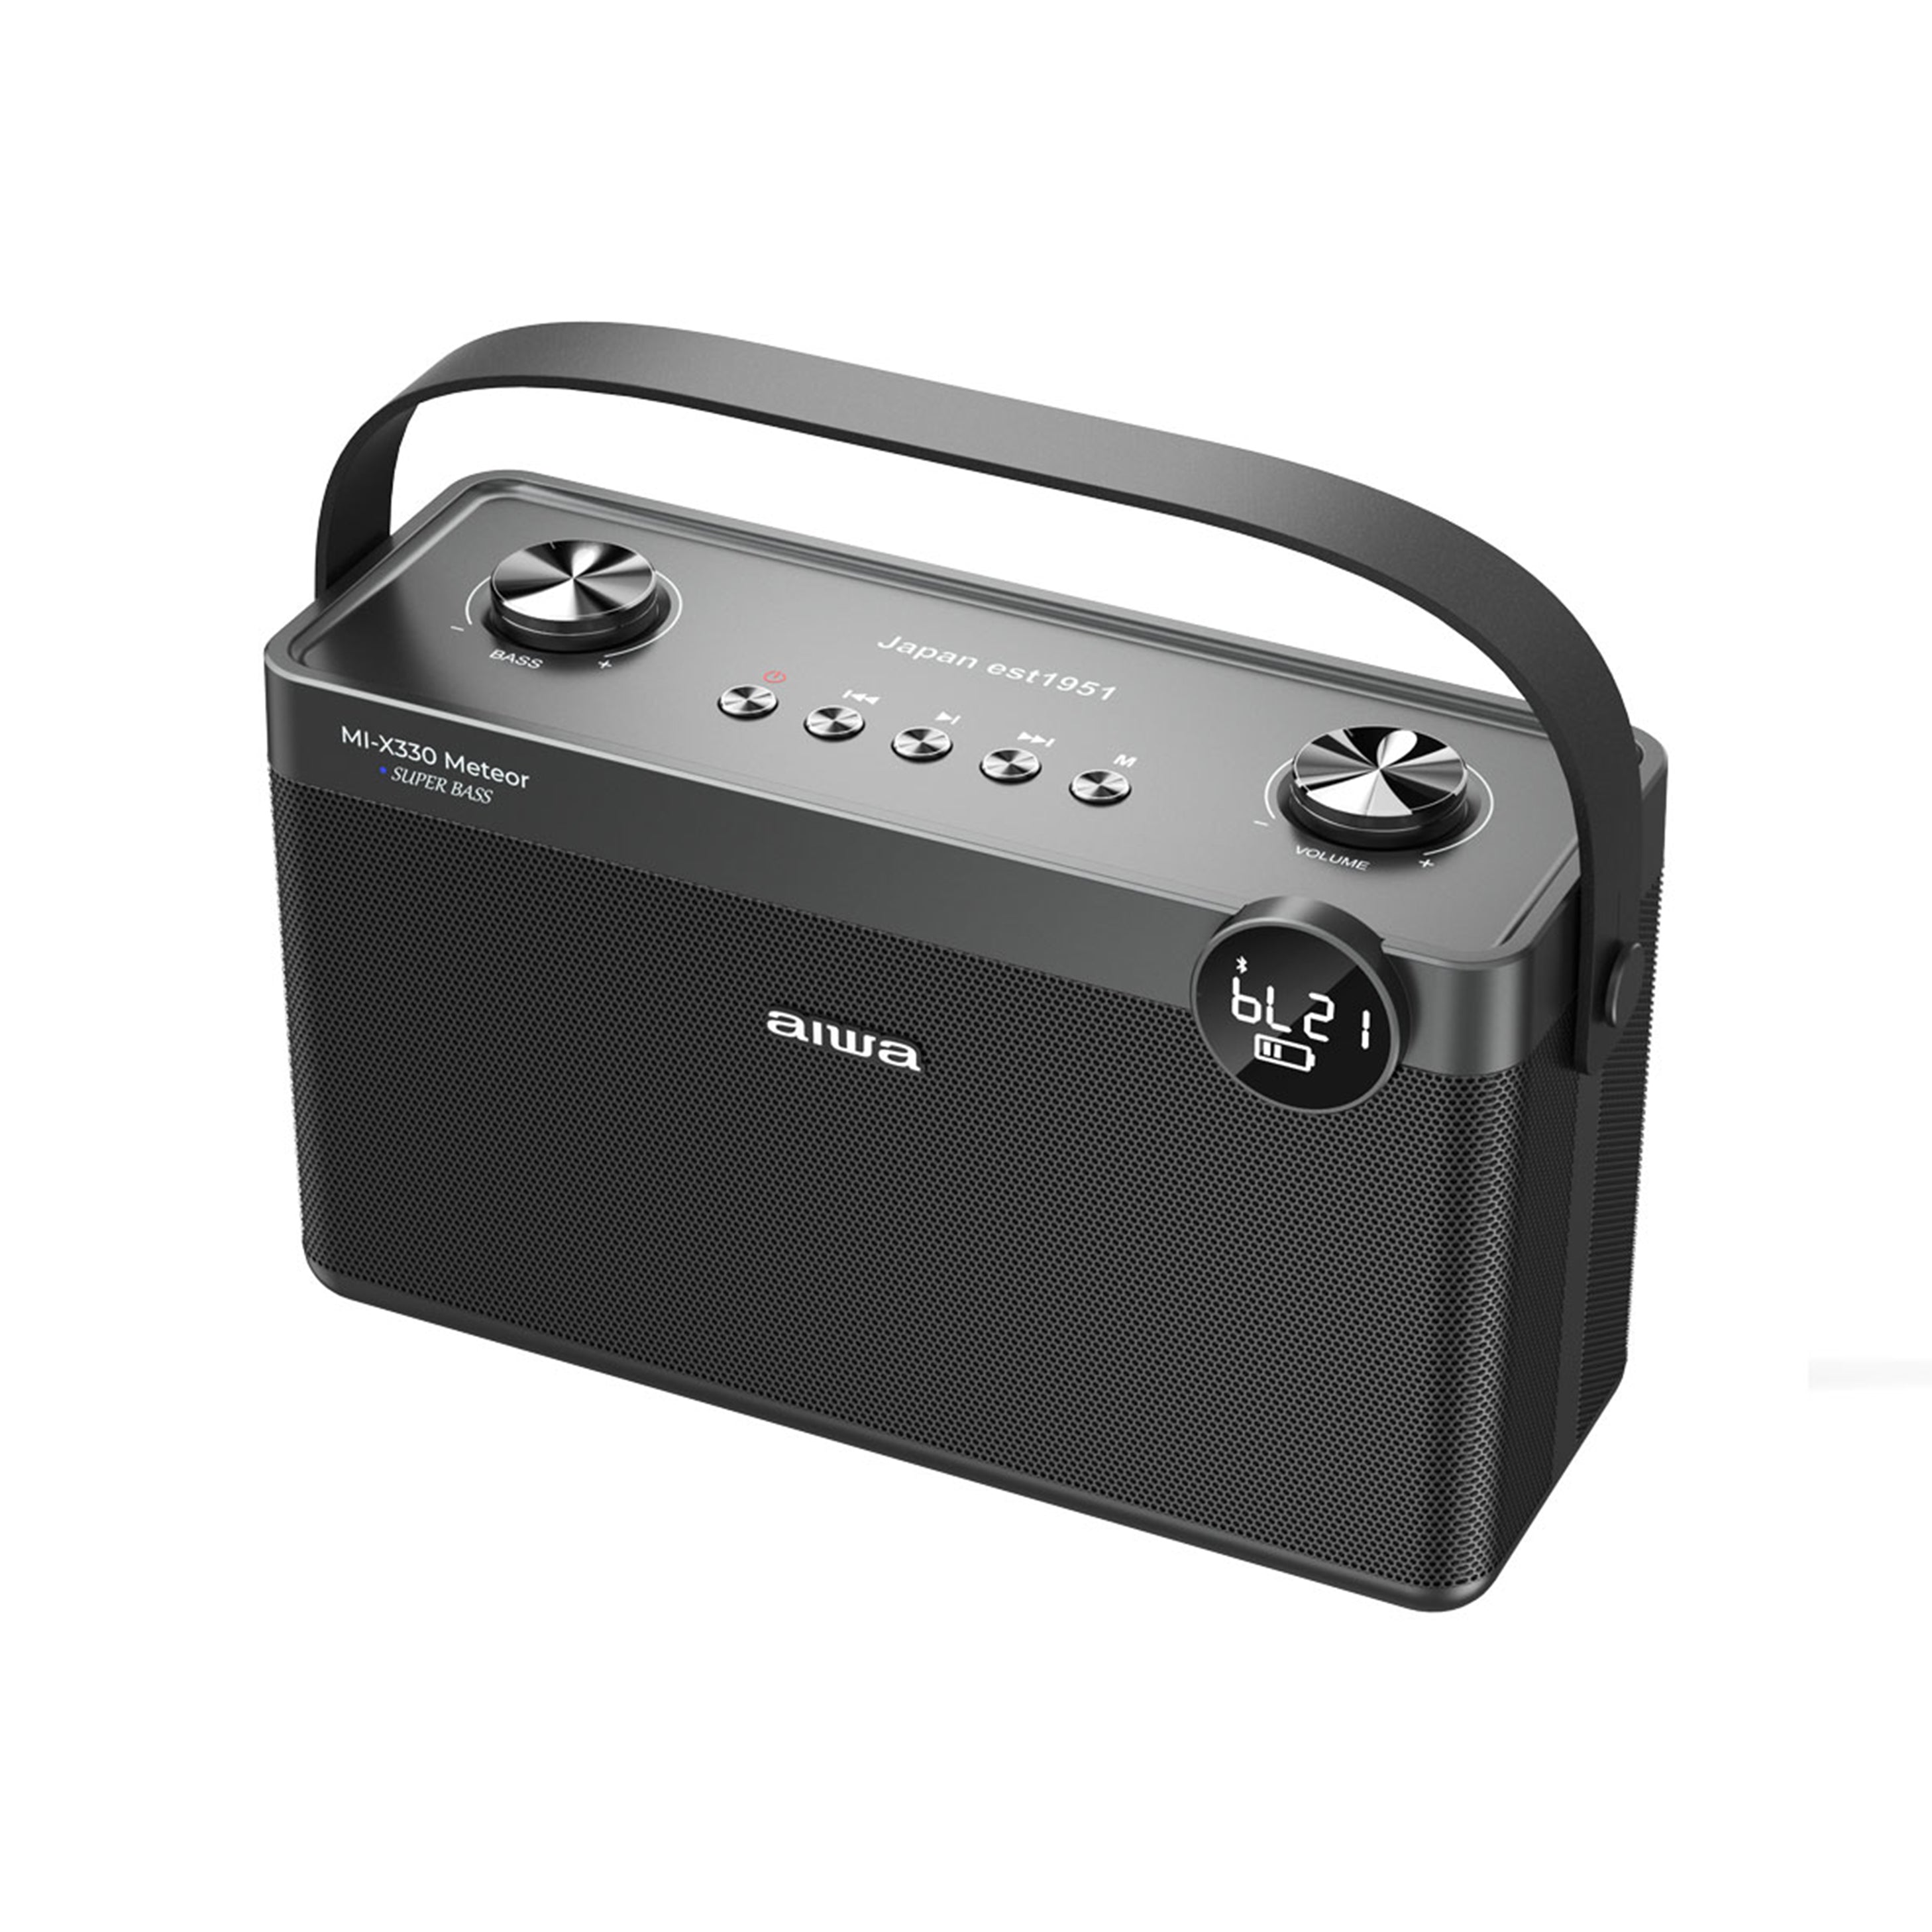 Phantom II 95 dB Iconic white - Powerful compact speaker